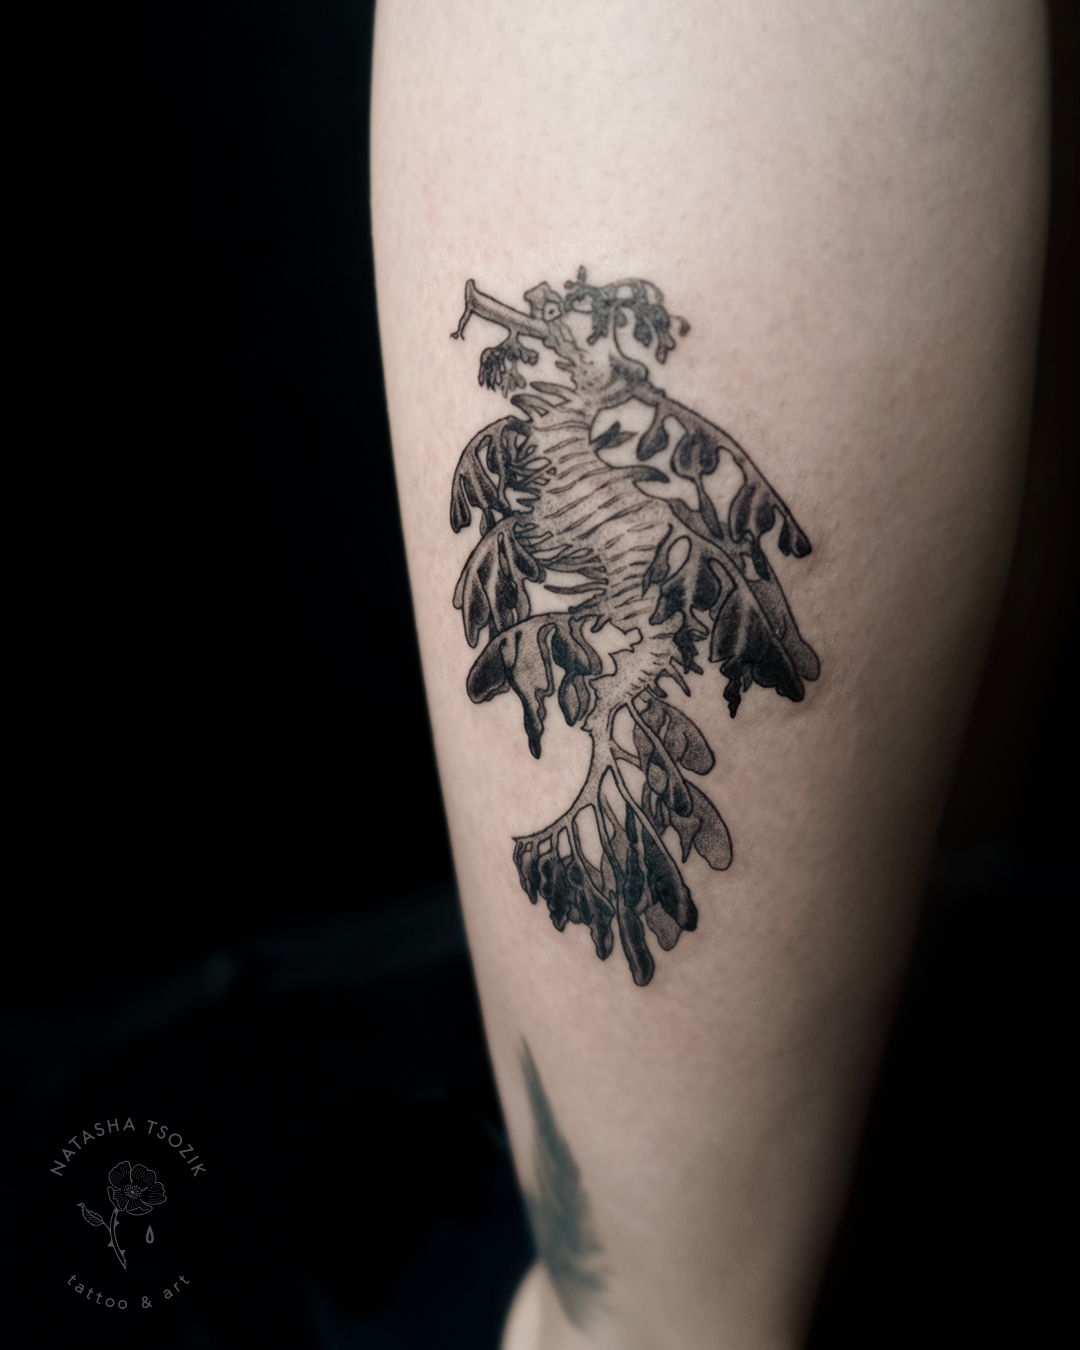 Seahorse tattoo on a leg.